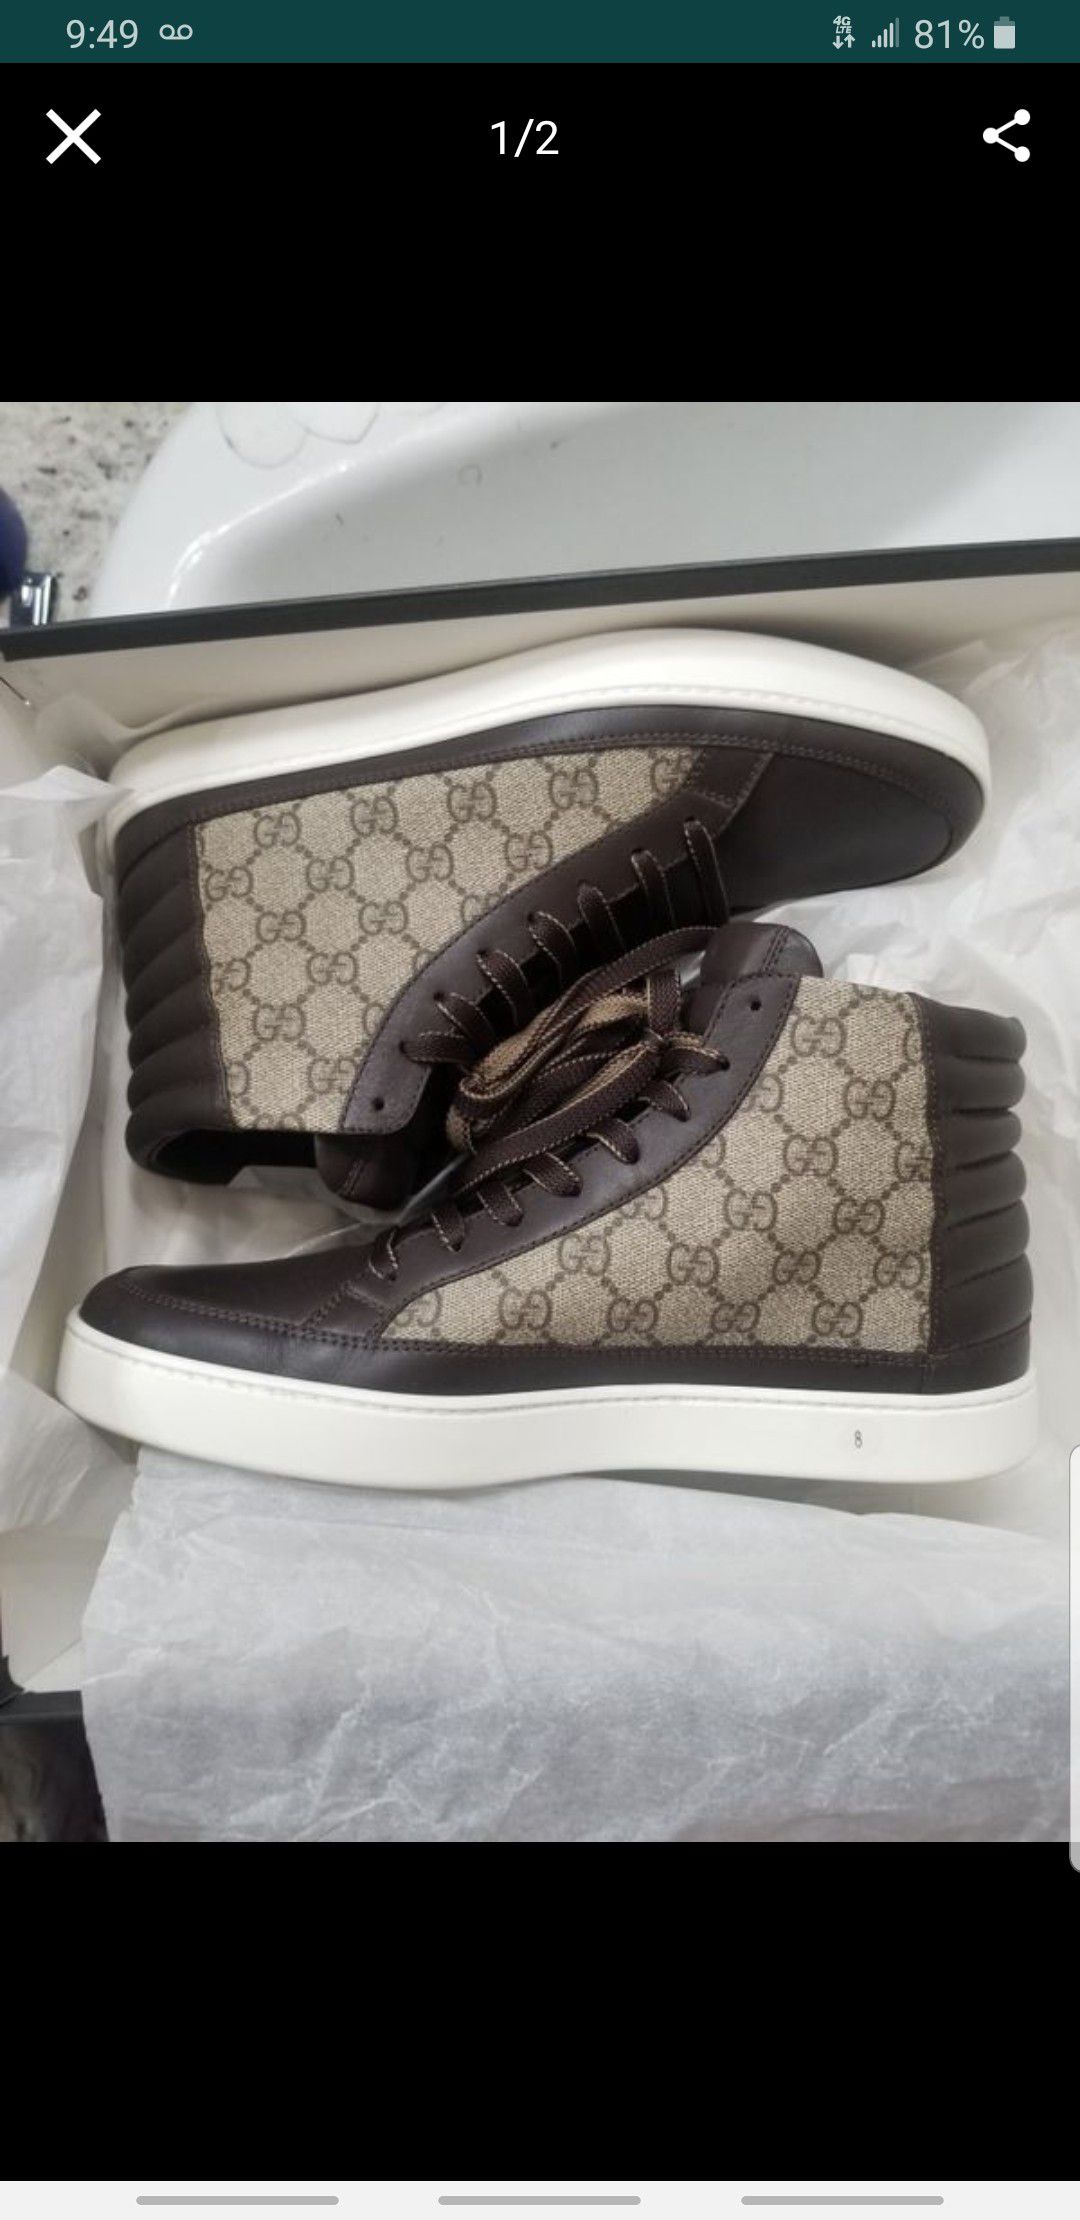 Gucci shoes size 9